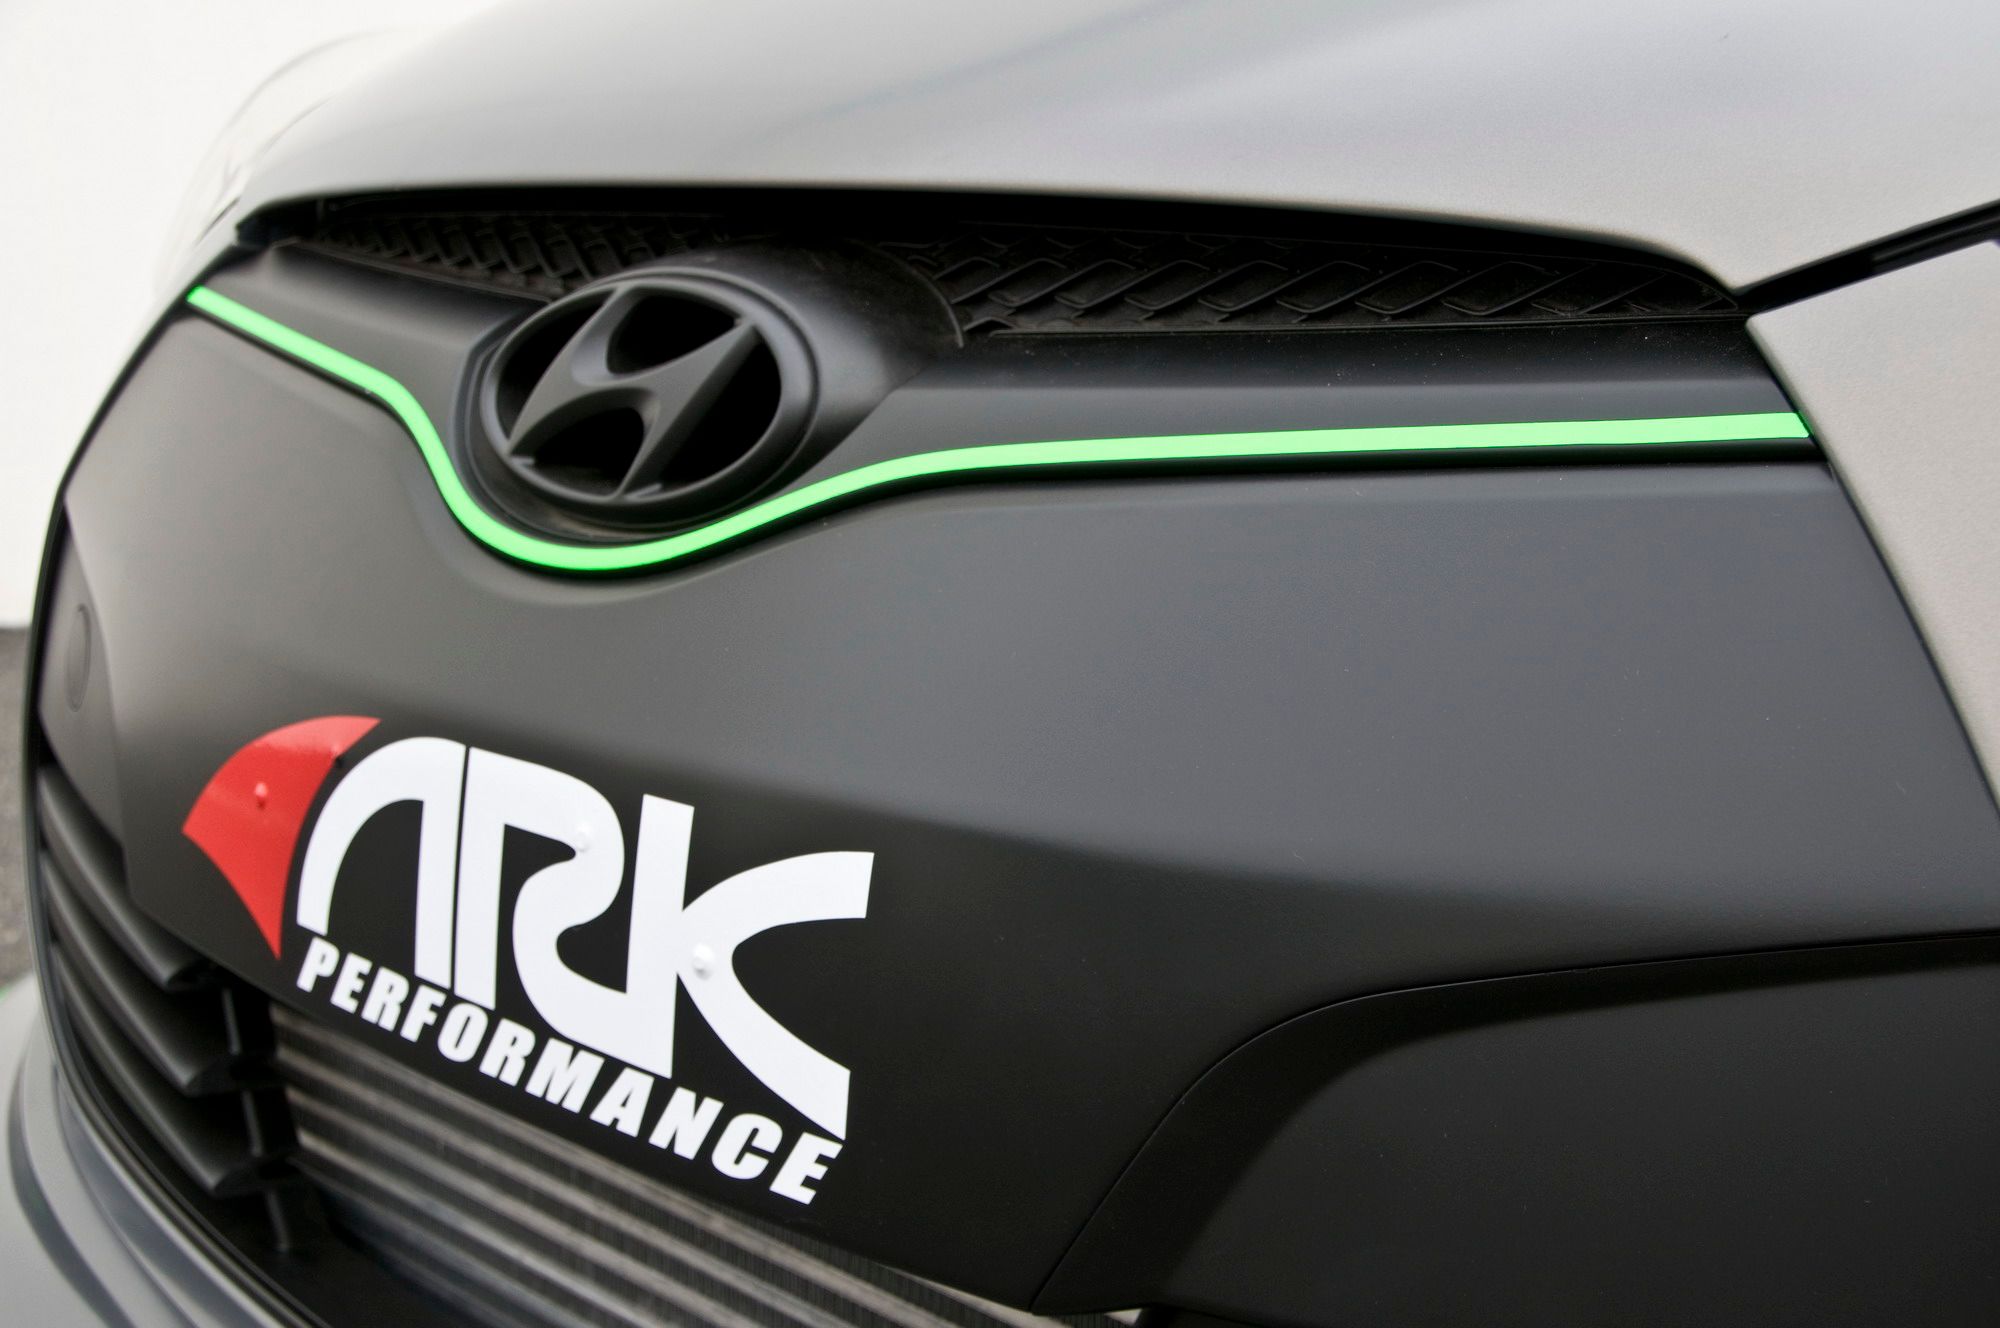 2012 Hyundai Veloster by ARK Performance 